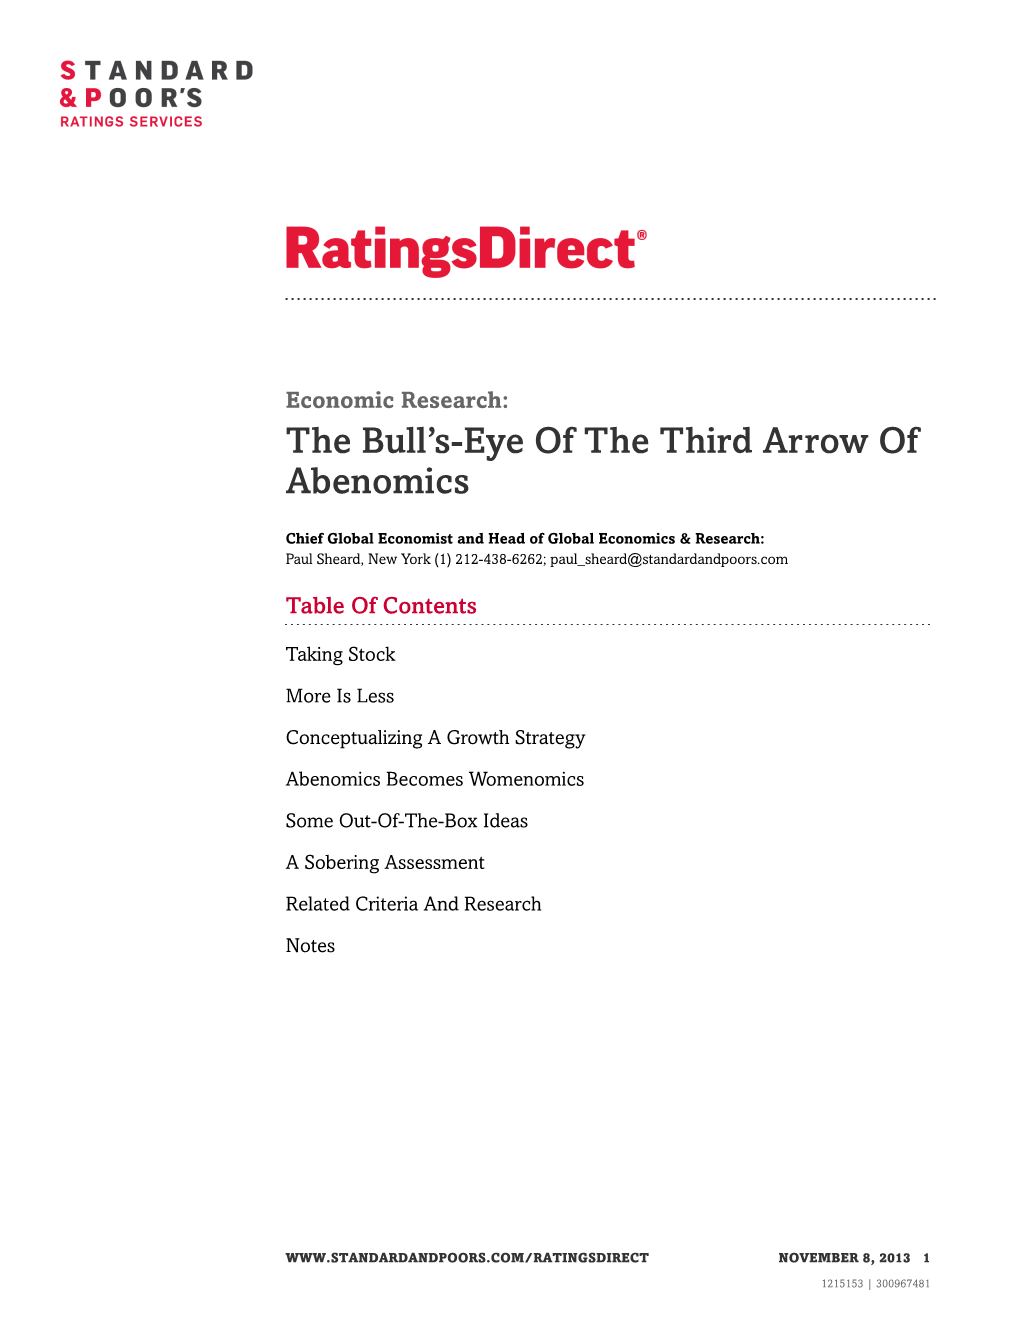 The Bull's-Eye of the Third Arrow of Abenomics